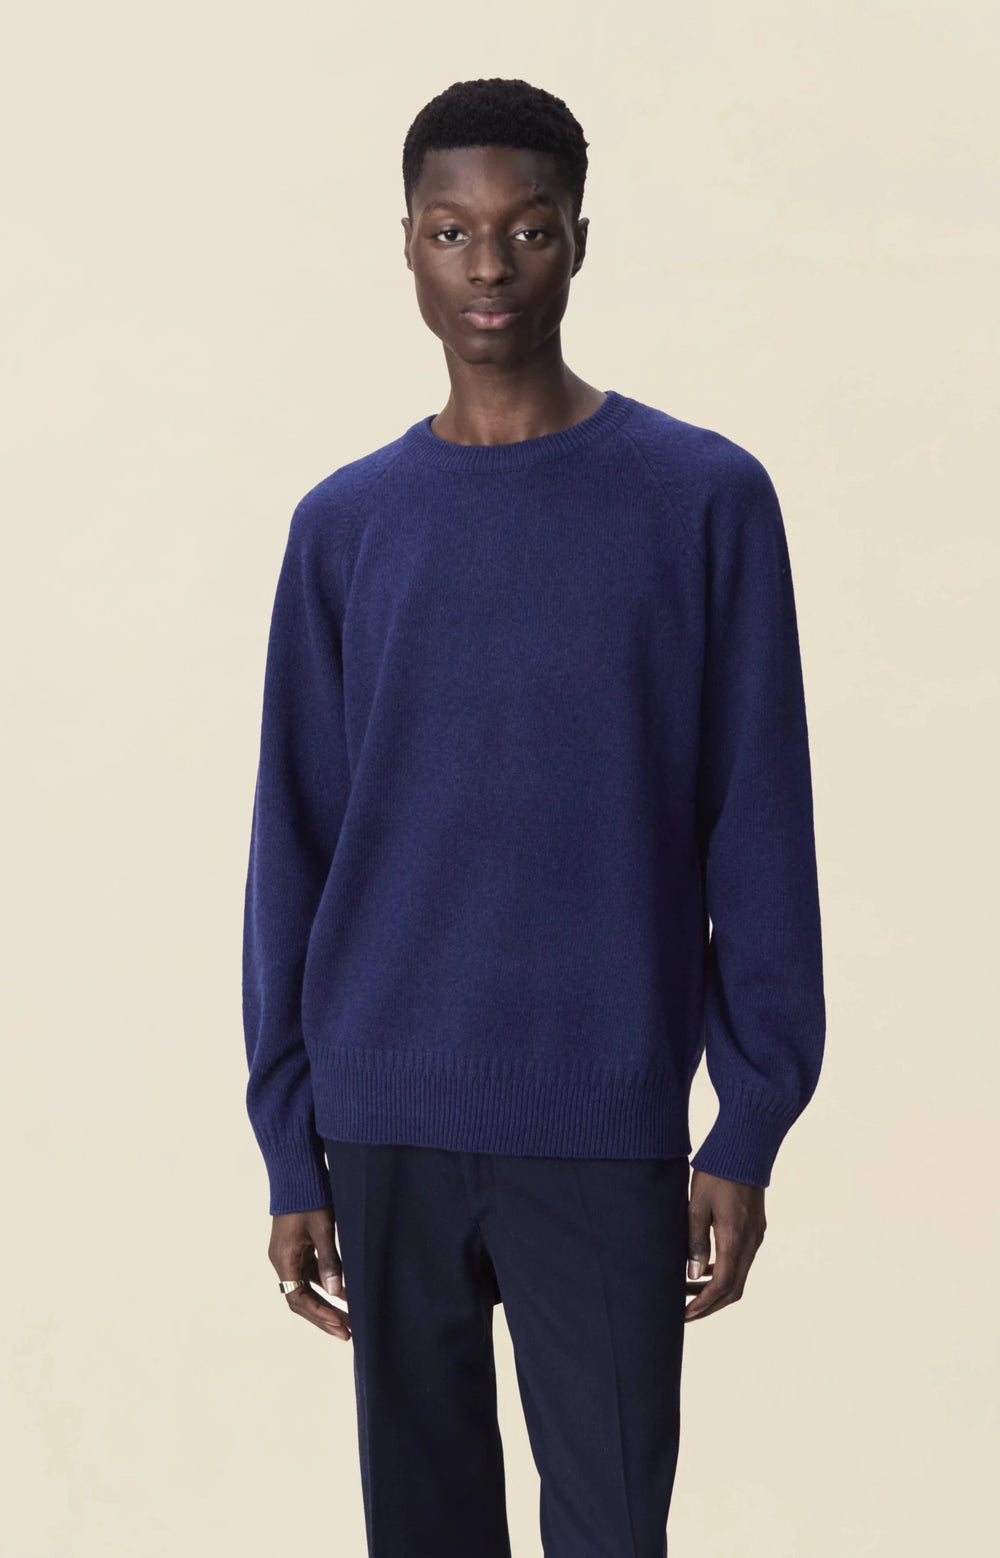 Men's cashmere crewneck sweater in Navy blue